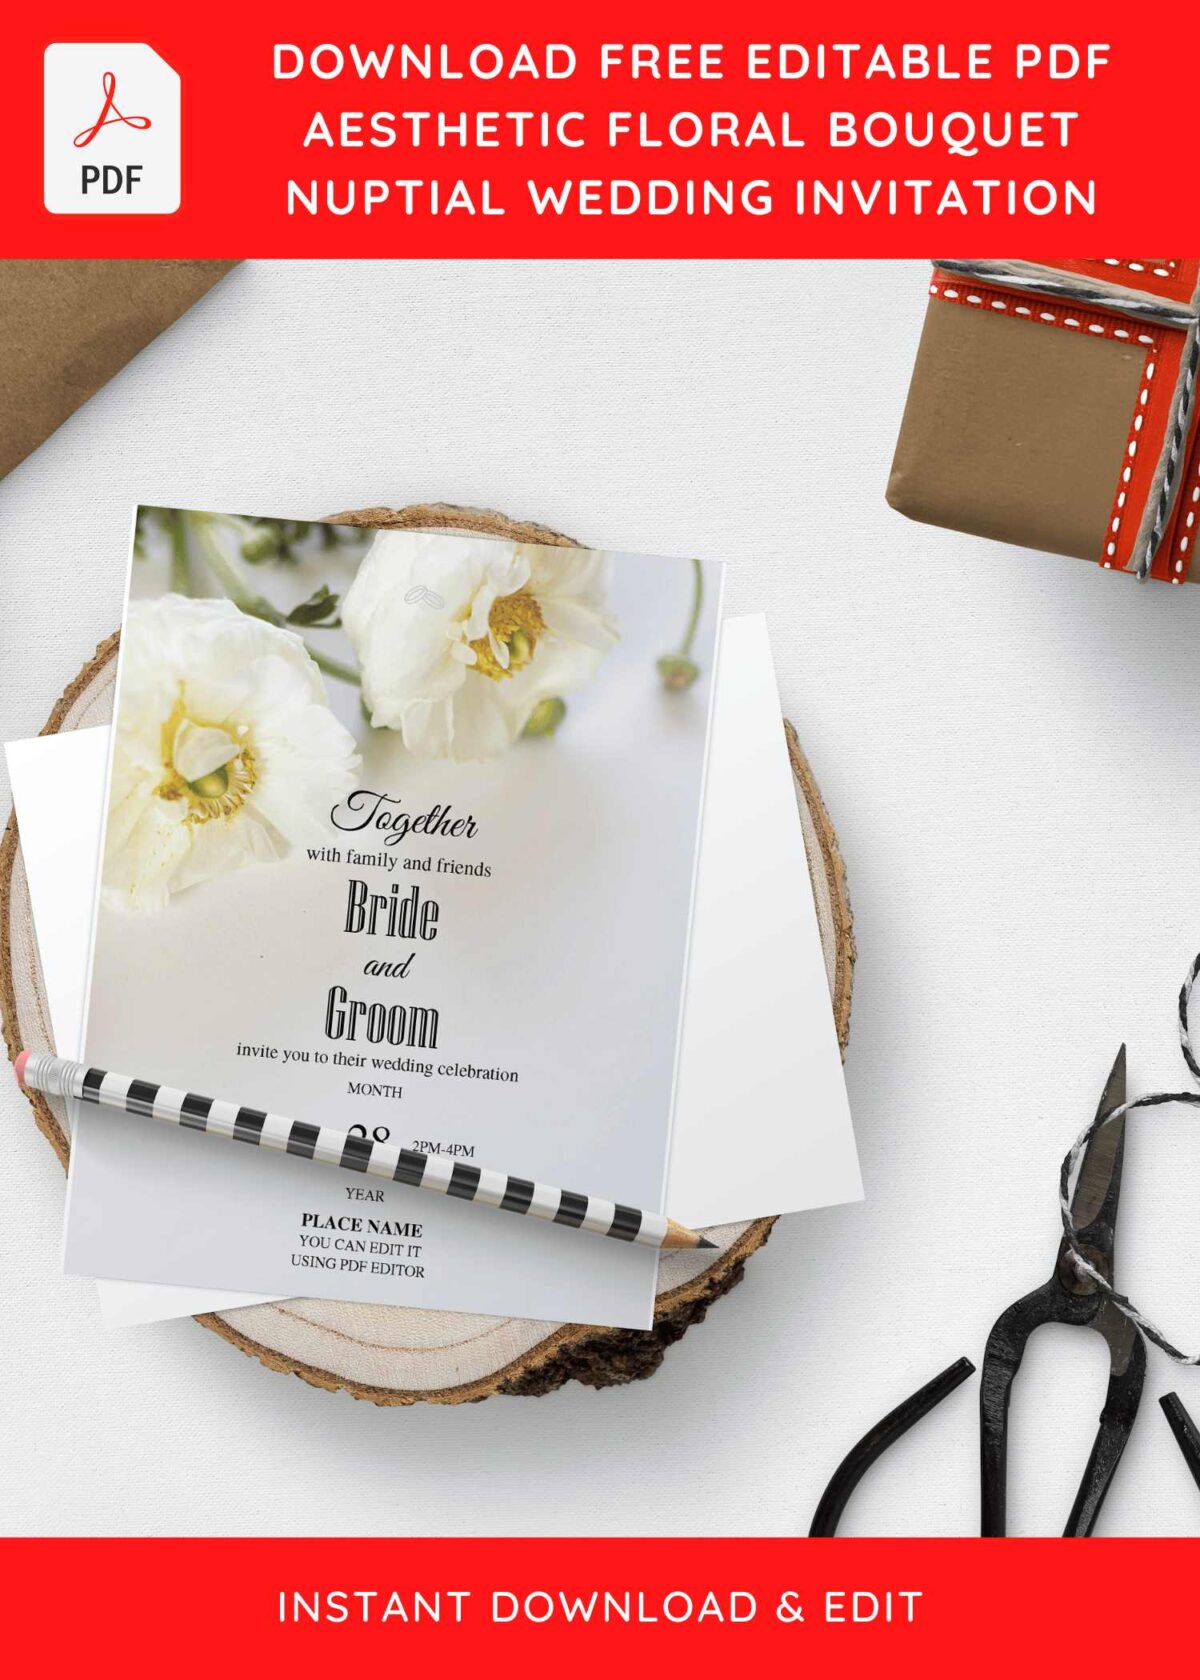 (Free Editable PDF) Pristine White Rose Wedding Invitation Templates with Romantic white rose